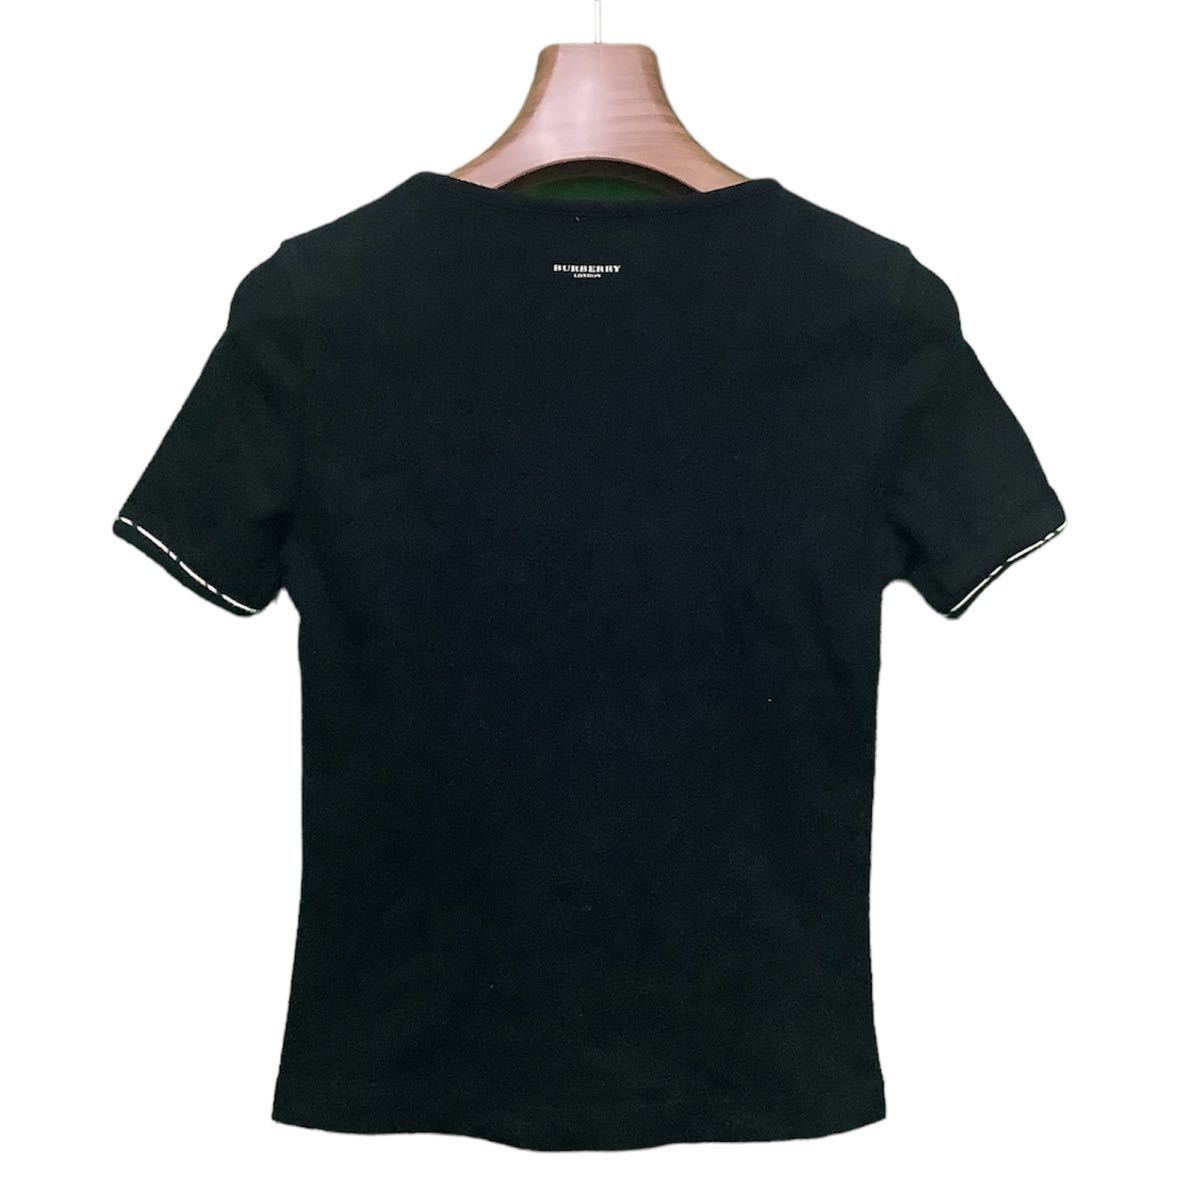 Burberry, バーバリー, 黒 ,半袖 ,Tシャツ ,カットソー ,古着, 38サイズ_画像3